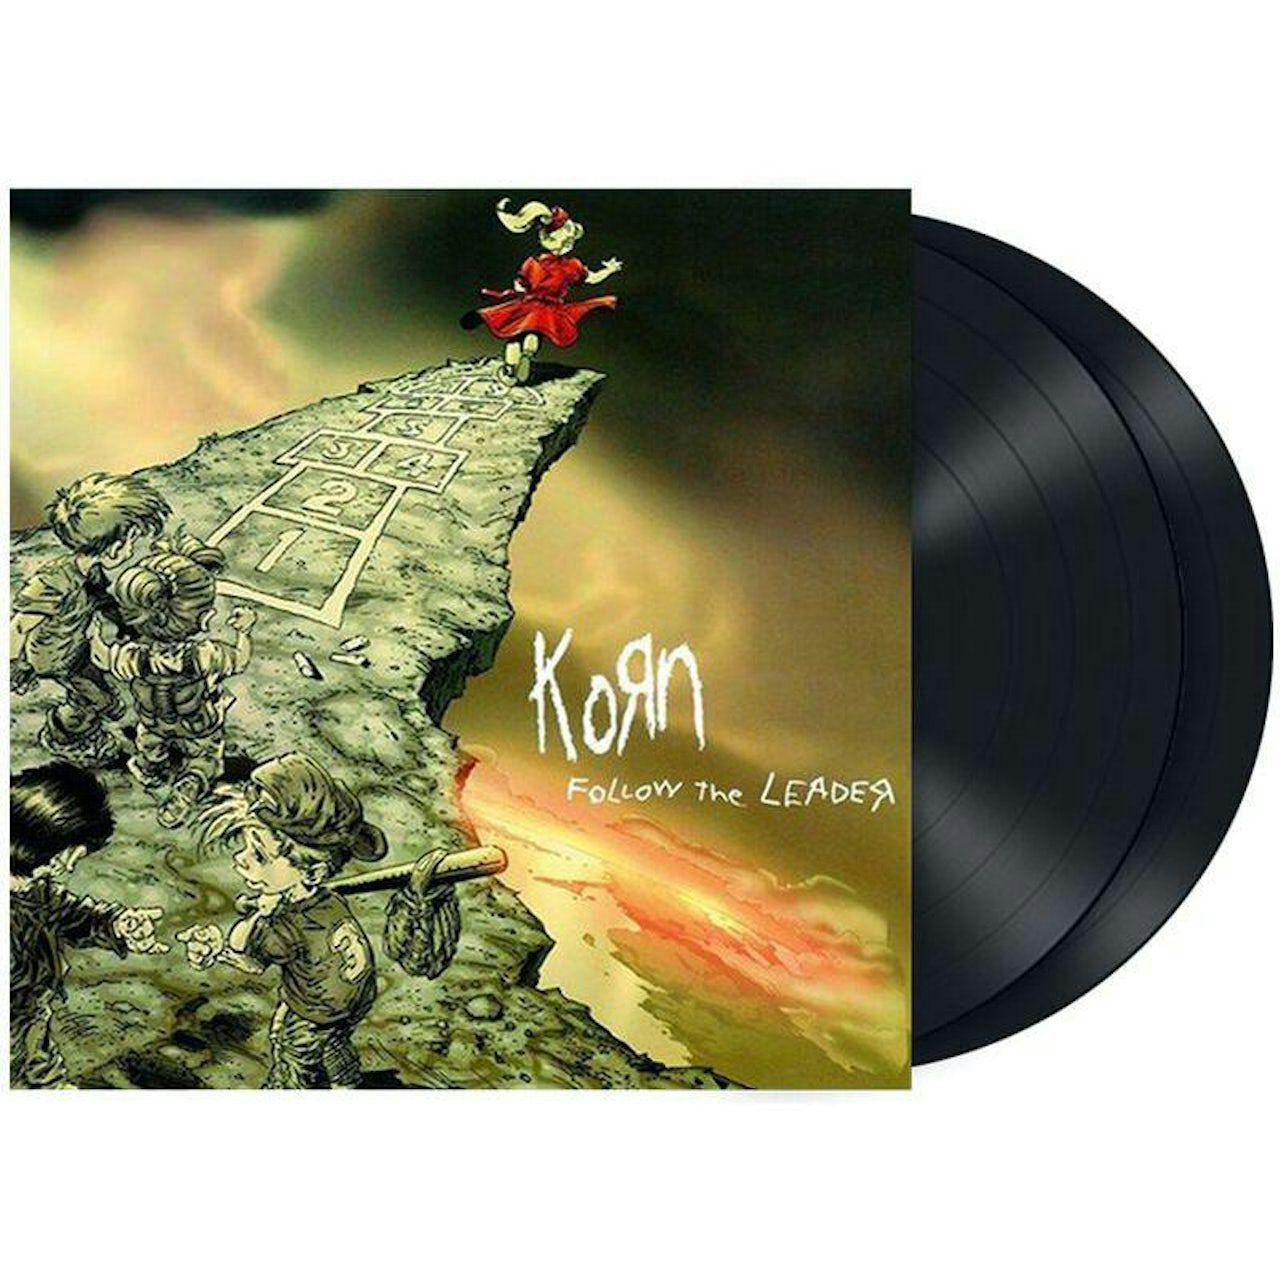 KORN FOLLOW THE LEADER LP Vinyl Analog レコード - 洋楽